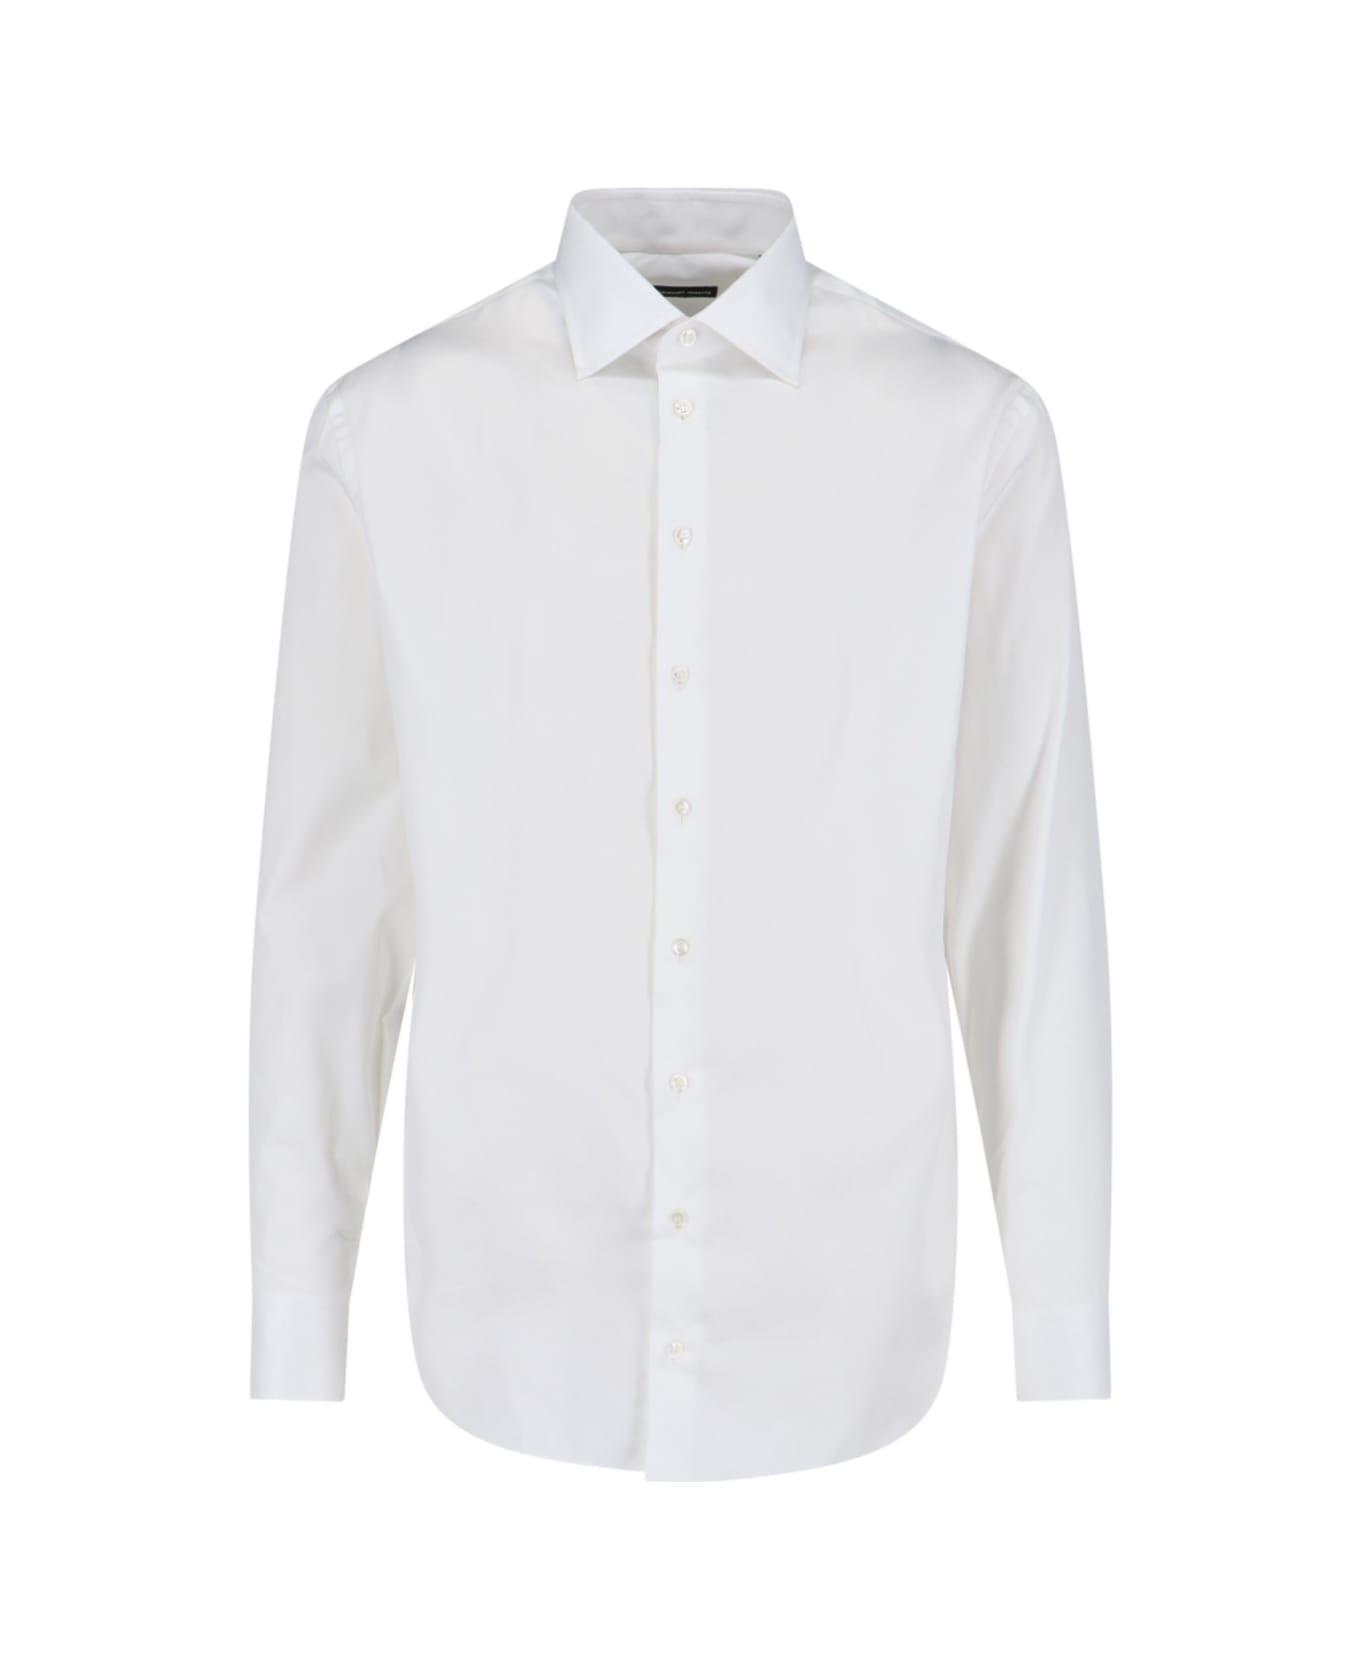 Giorgio Armani Classic Shirt - White